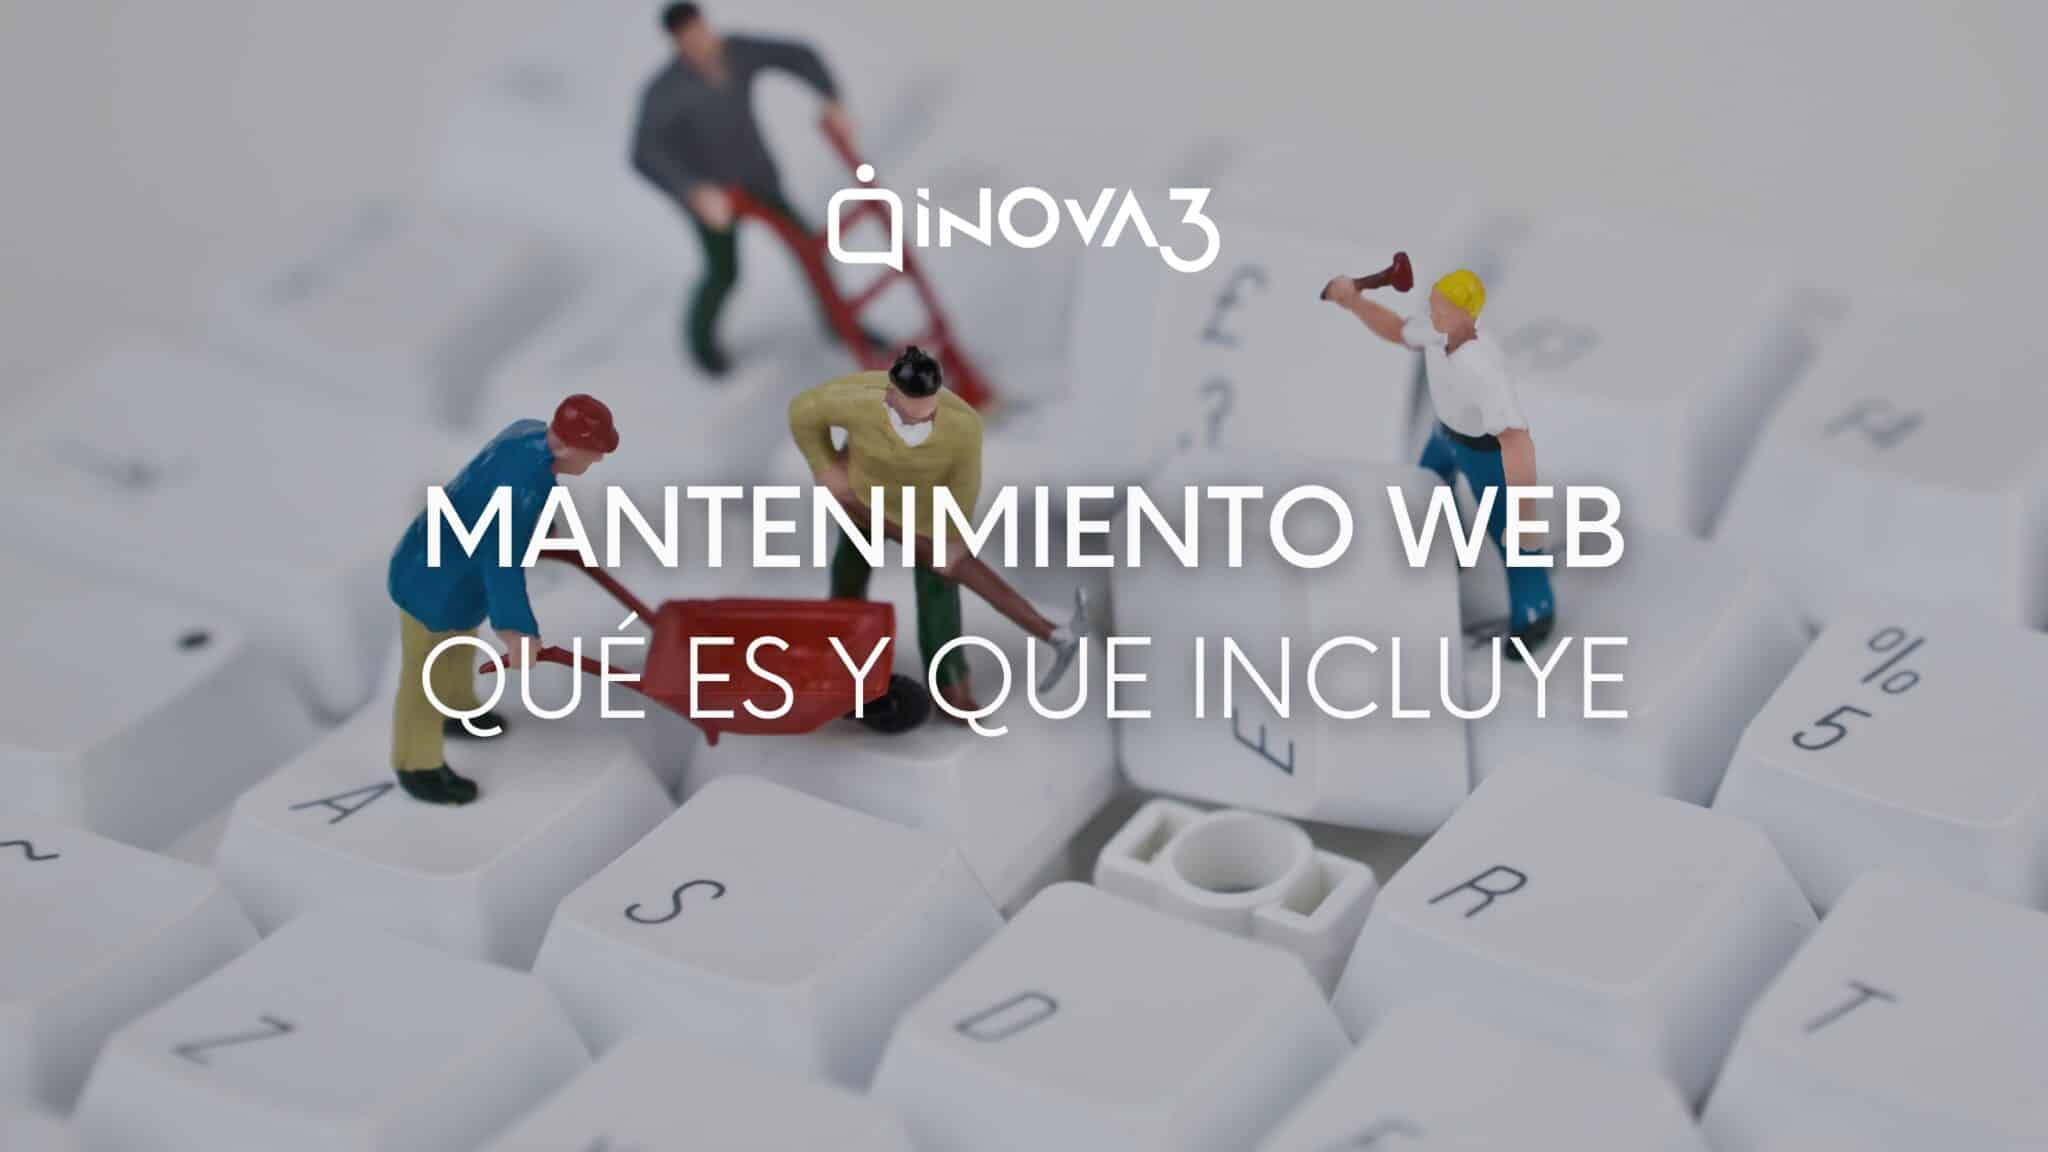 INOVA 3 MANTENIMIENTO WEB 2022 scaled - inova3 - Marketing digital desde ourense